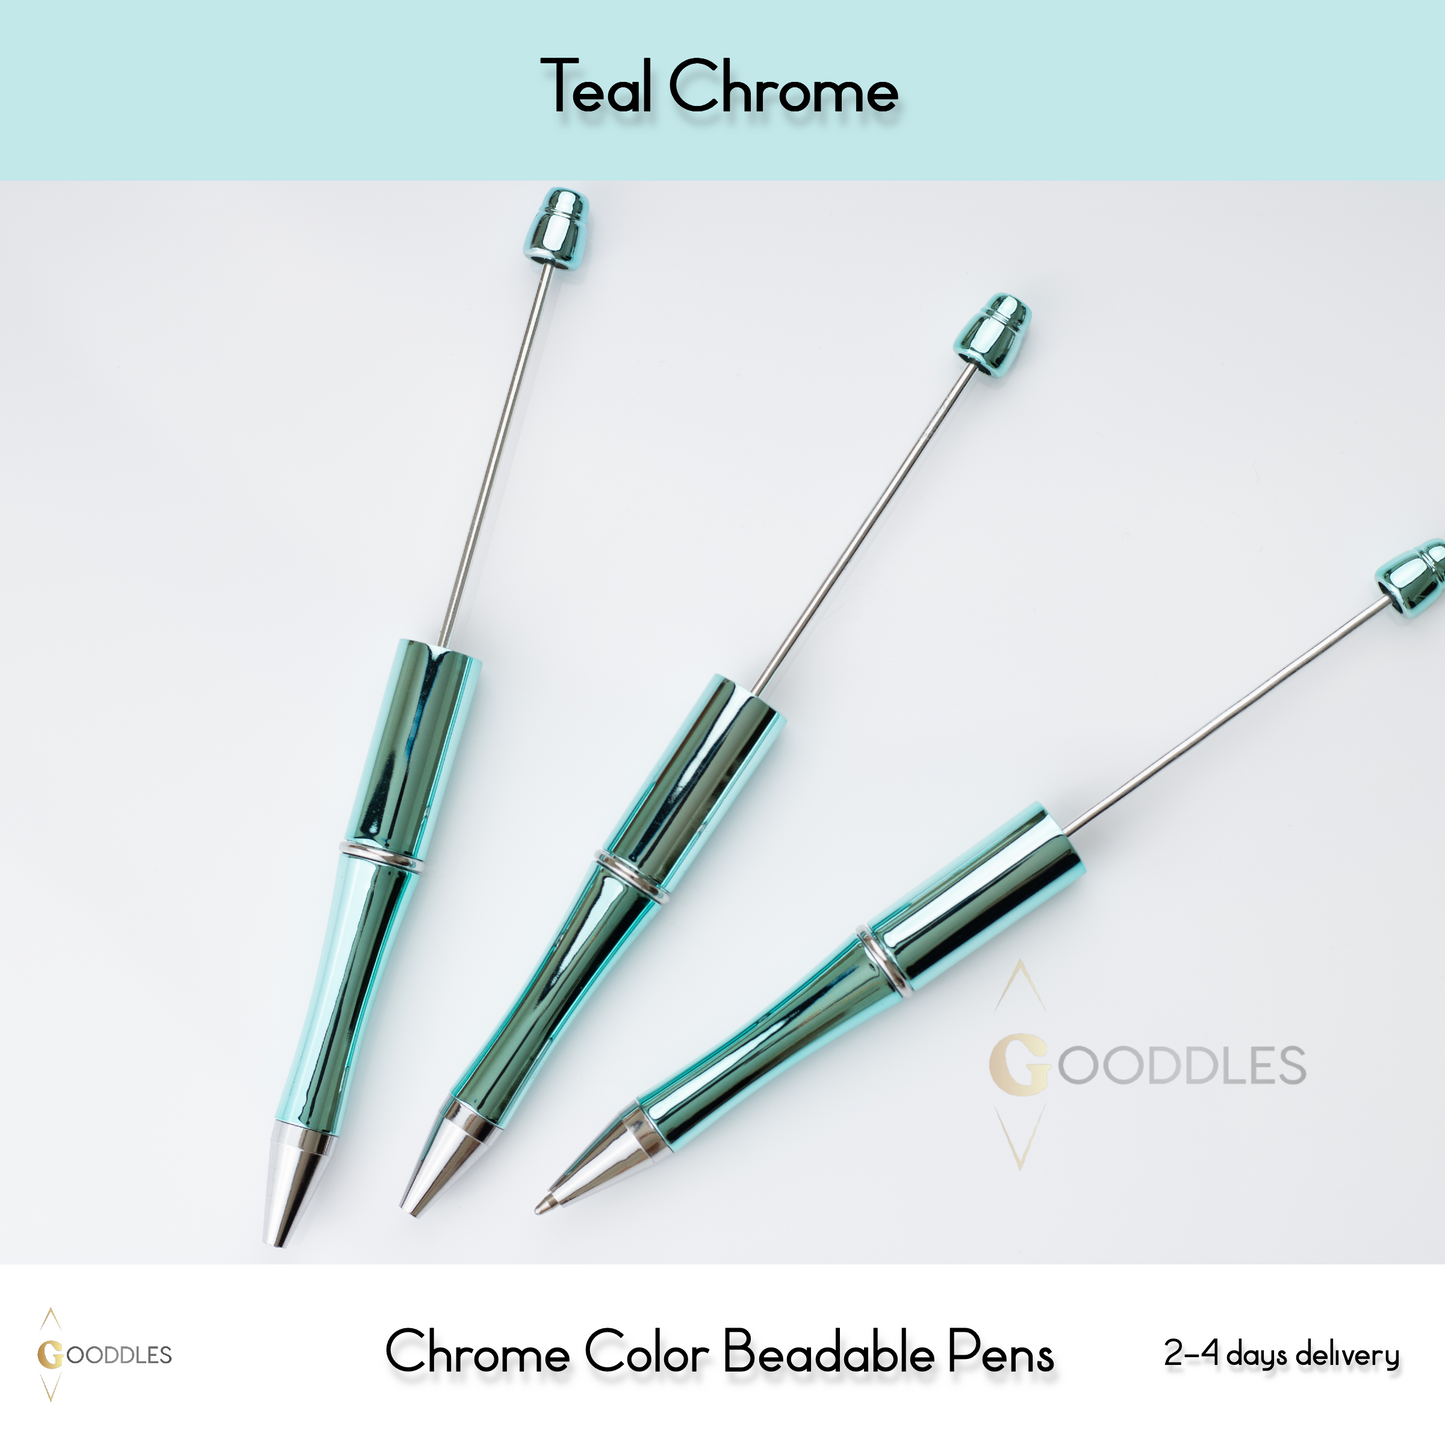 Teal Chrome Pens